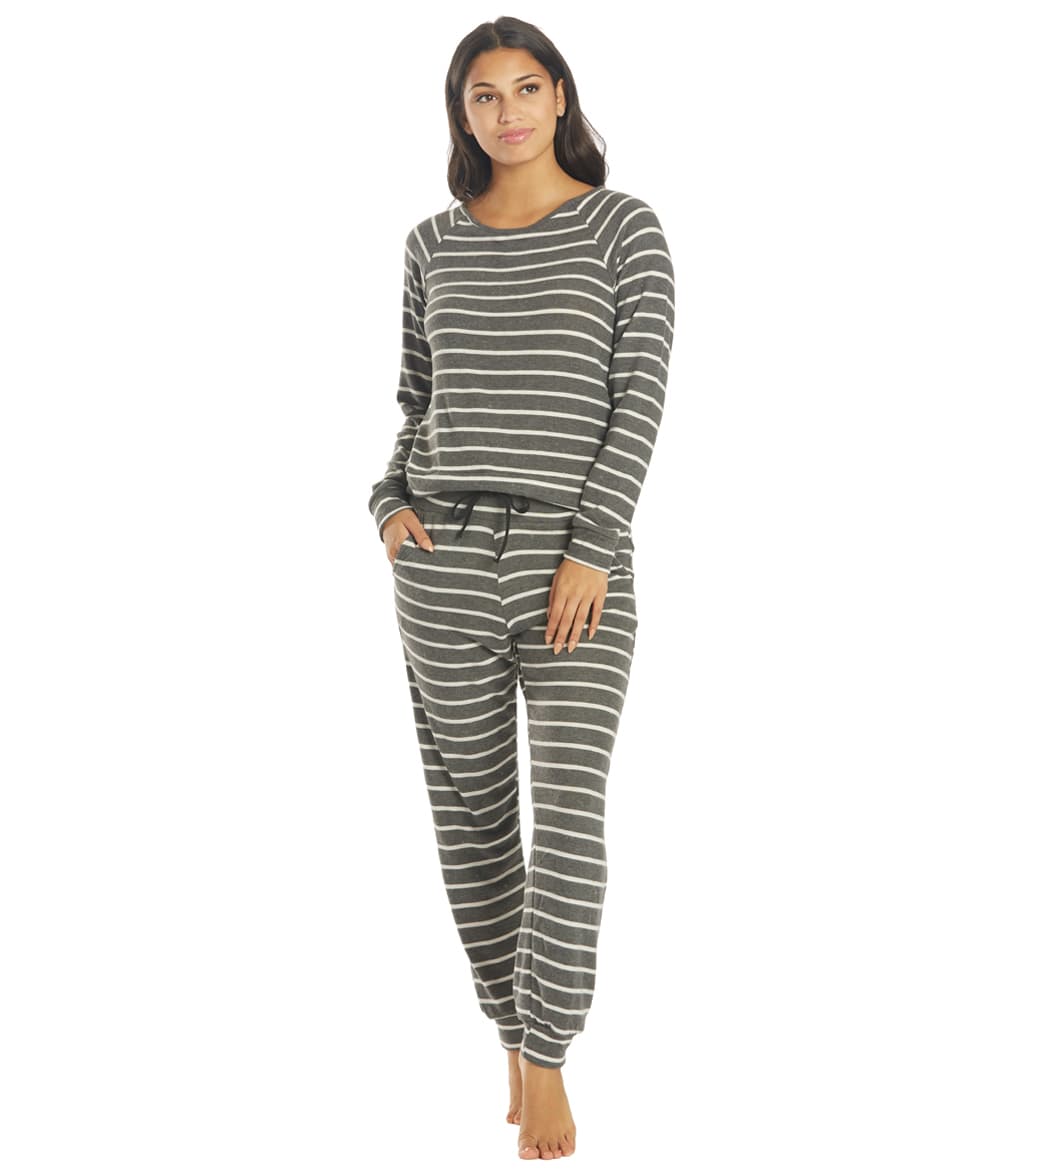 Nytt Pointelle Loungewear Set - Grey/White Stripe Small Size Small - Swimoutlet.com